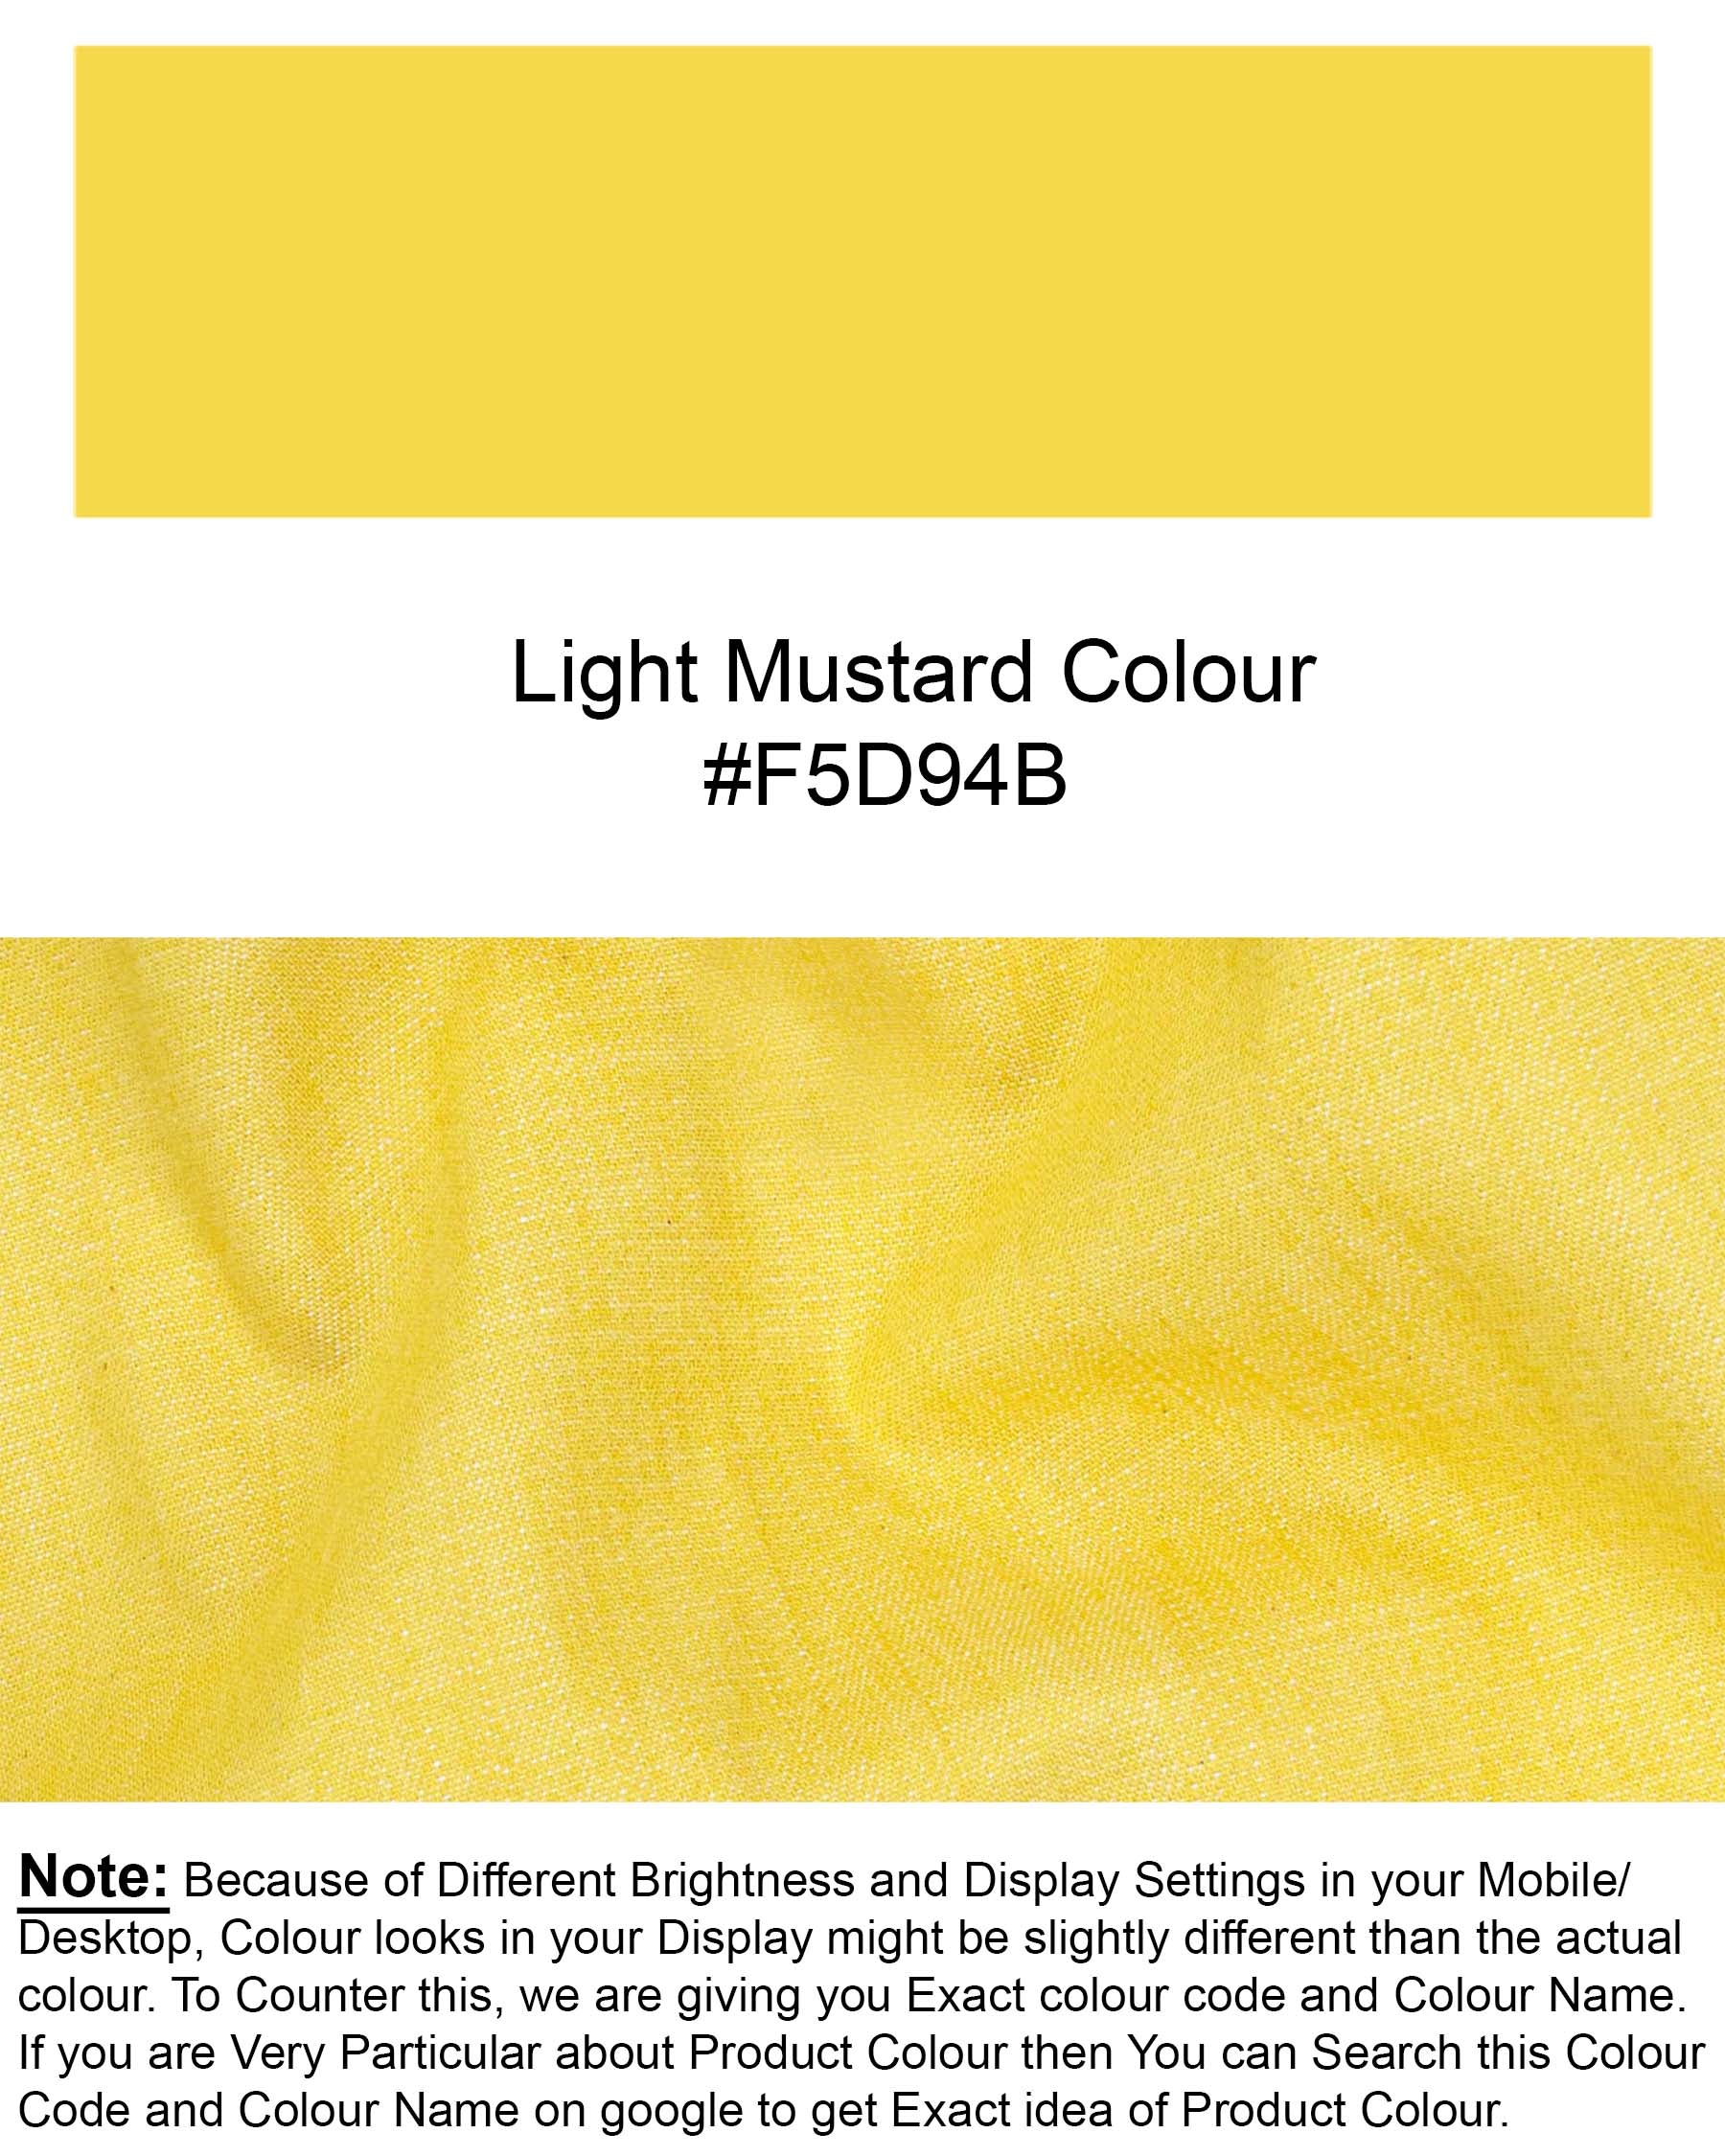 Light Mustard Yellow heavyweight Zipper Closure Royal Oxford Overshirt 6921-P75-38,6921-P75-38,6921-P75-39,6921-P75-39,6921-P75-40,6921-P75-40,6921-P75-42,6921-P75-42,6921-P75-44,6921-P75-44,6921-P75-46,6921-P75-46,6921-P75-48,6921-P75-48,6921-P75-50,6921-P75-50,6921-P75-52,6921-P75-52